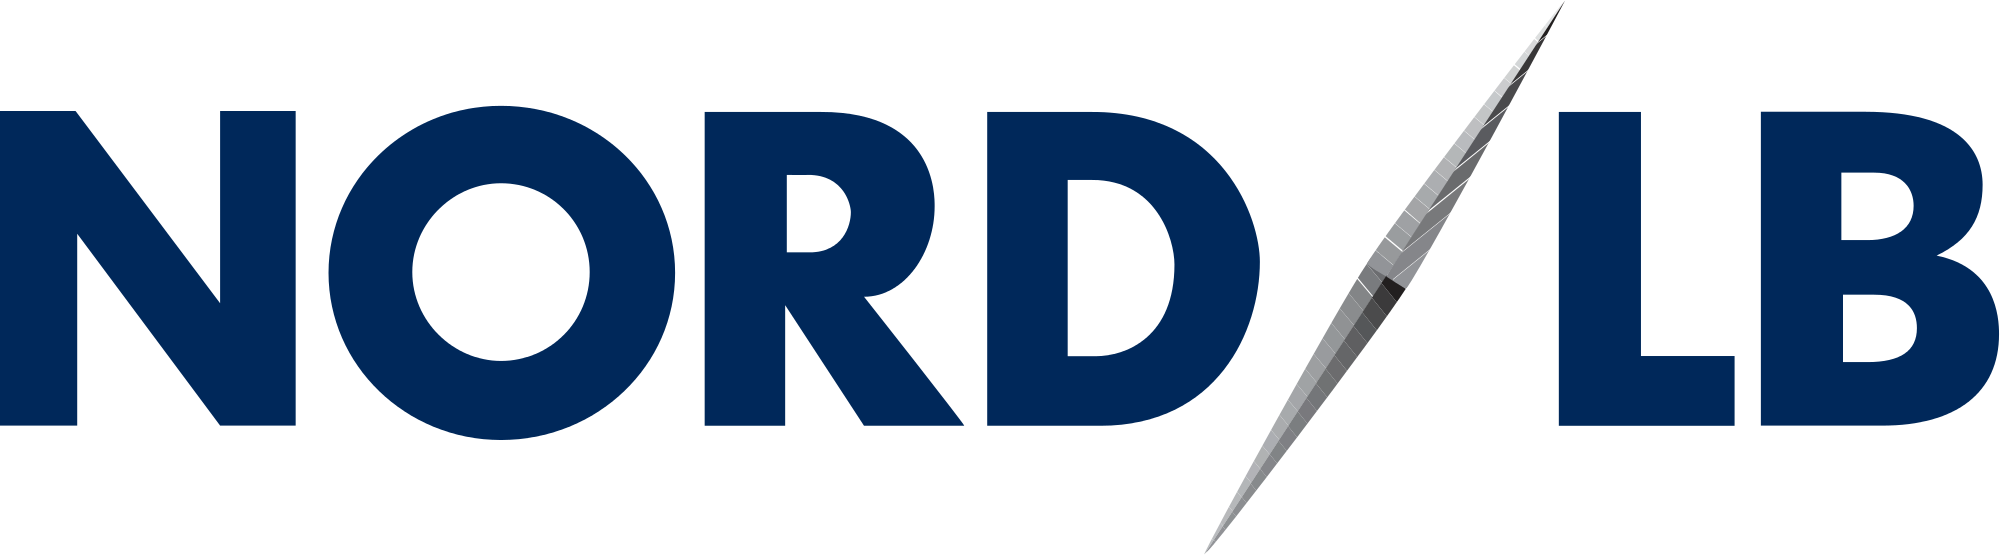 Nordlb-logo.svg